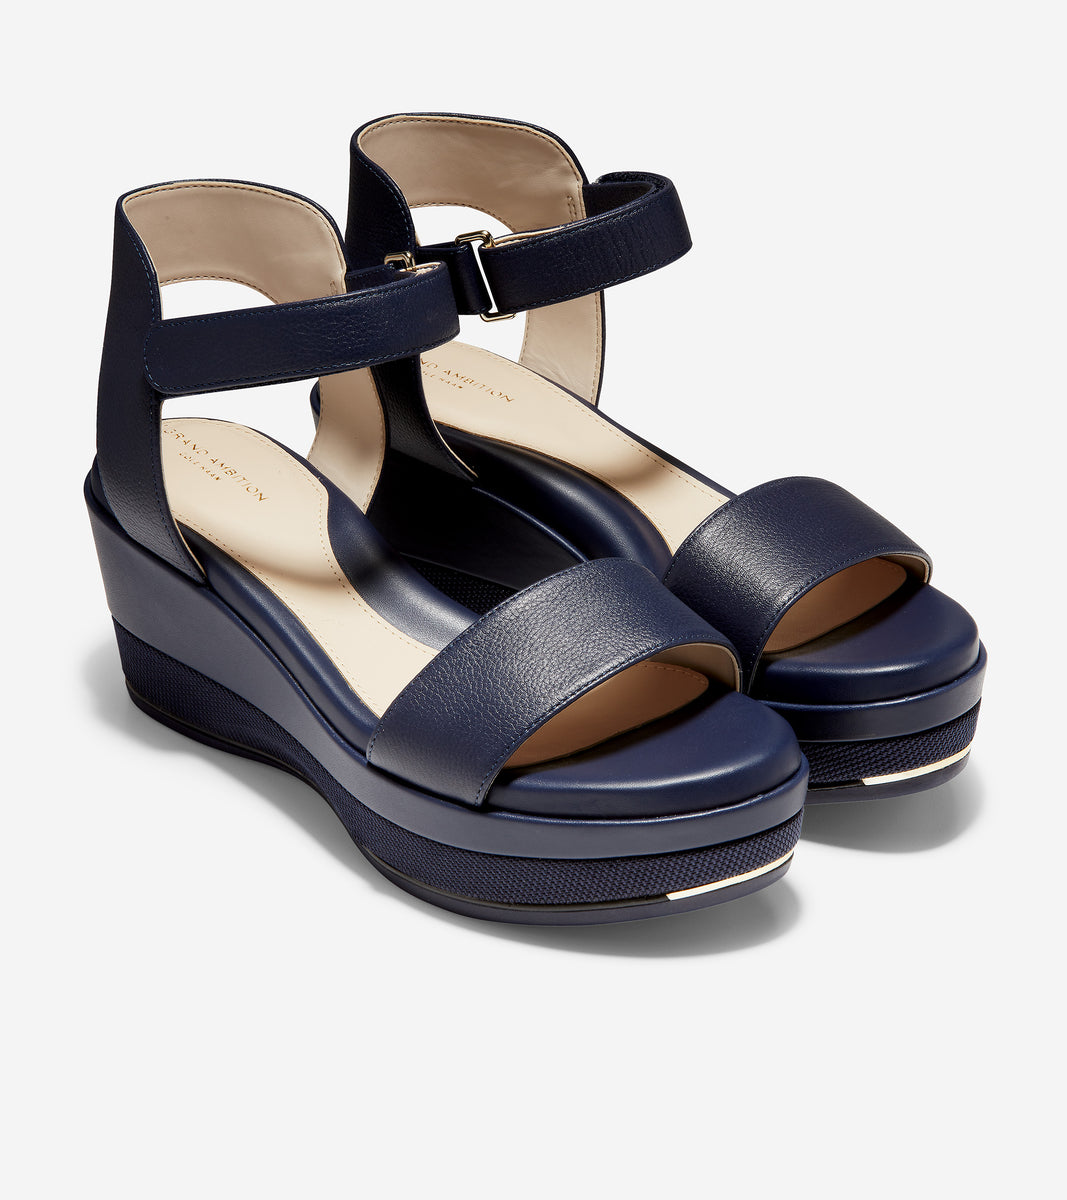 ColeHaan-Grand Ambition Flatform Sandal-w18723-Marine Blue Leather